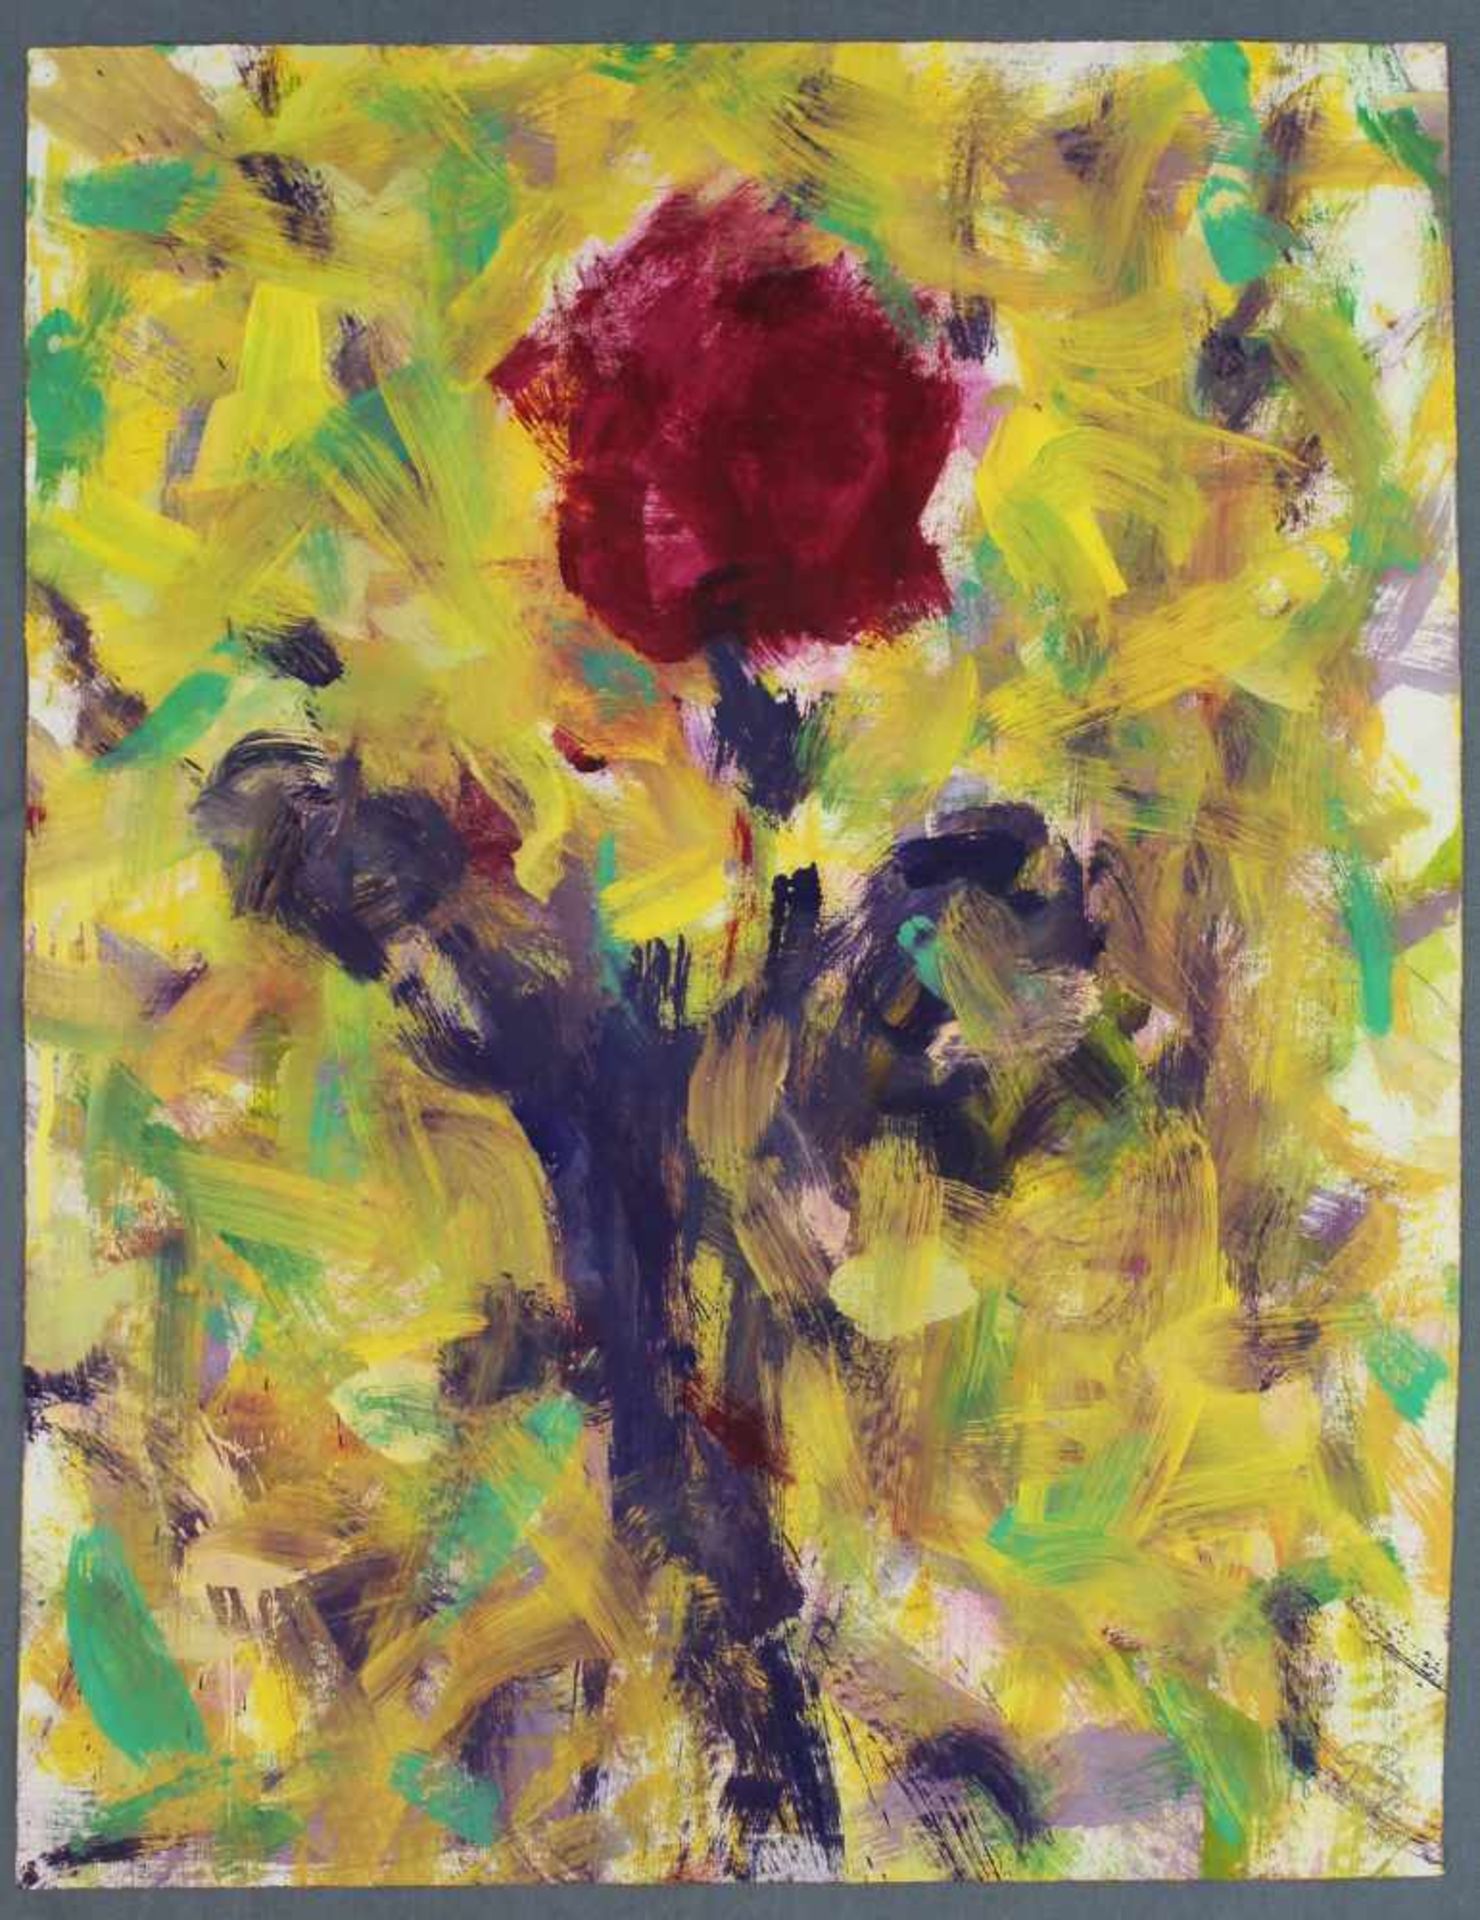 Fridolin FRENZEL (1930 -). "Rose" 1993 64 cm x 49 cm. Rechts unten ligiert und datiert 93. Verso: